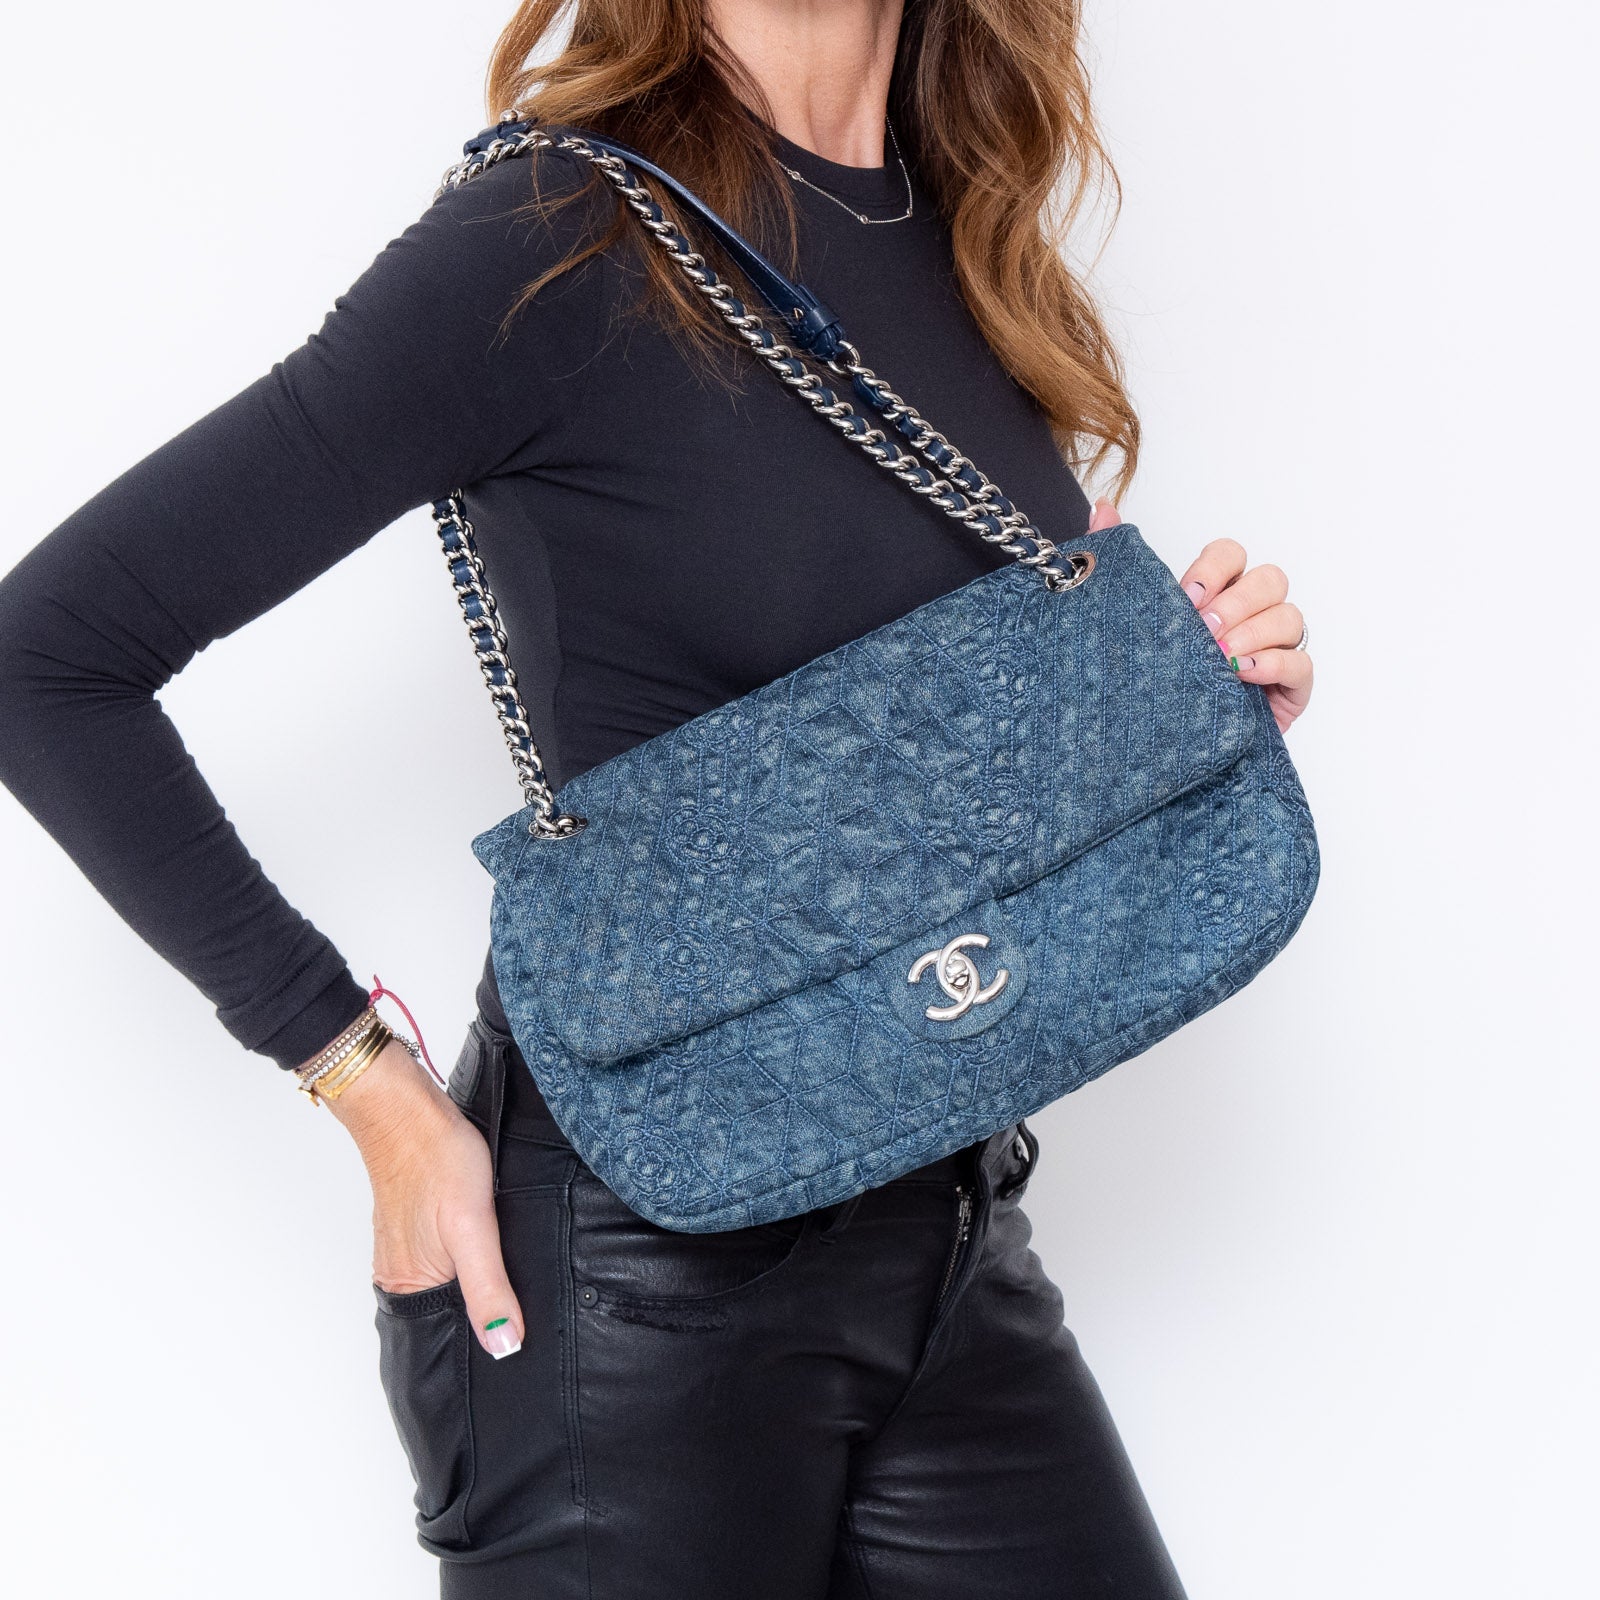 Chanel Denim Flap Bag Reveal!